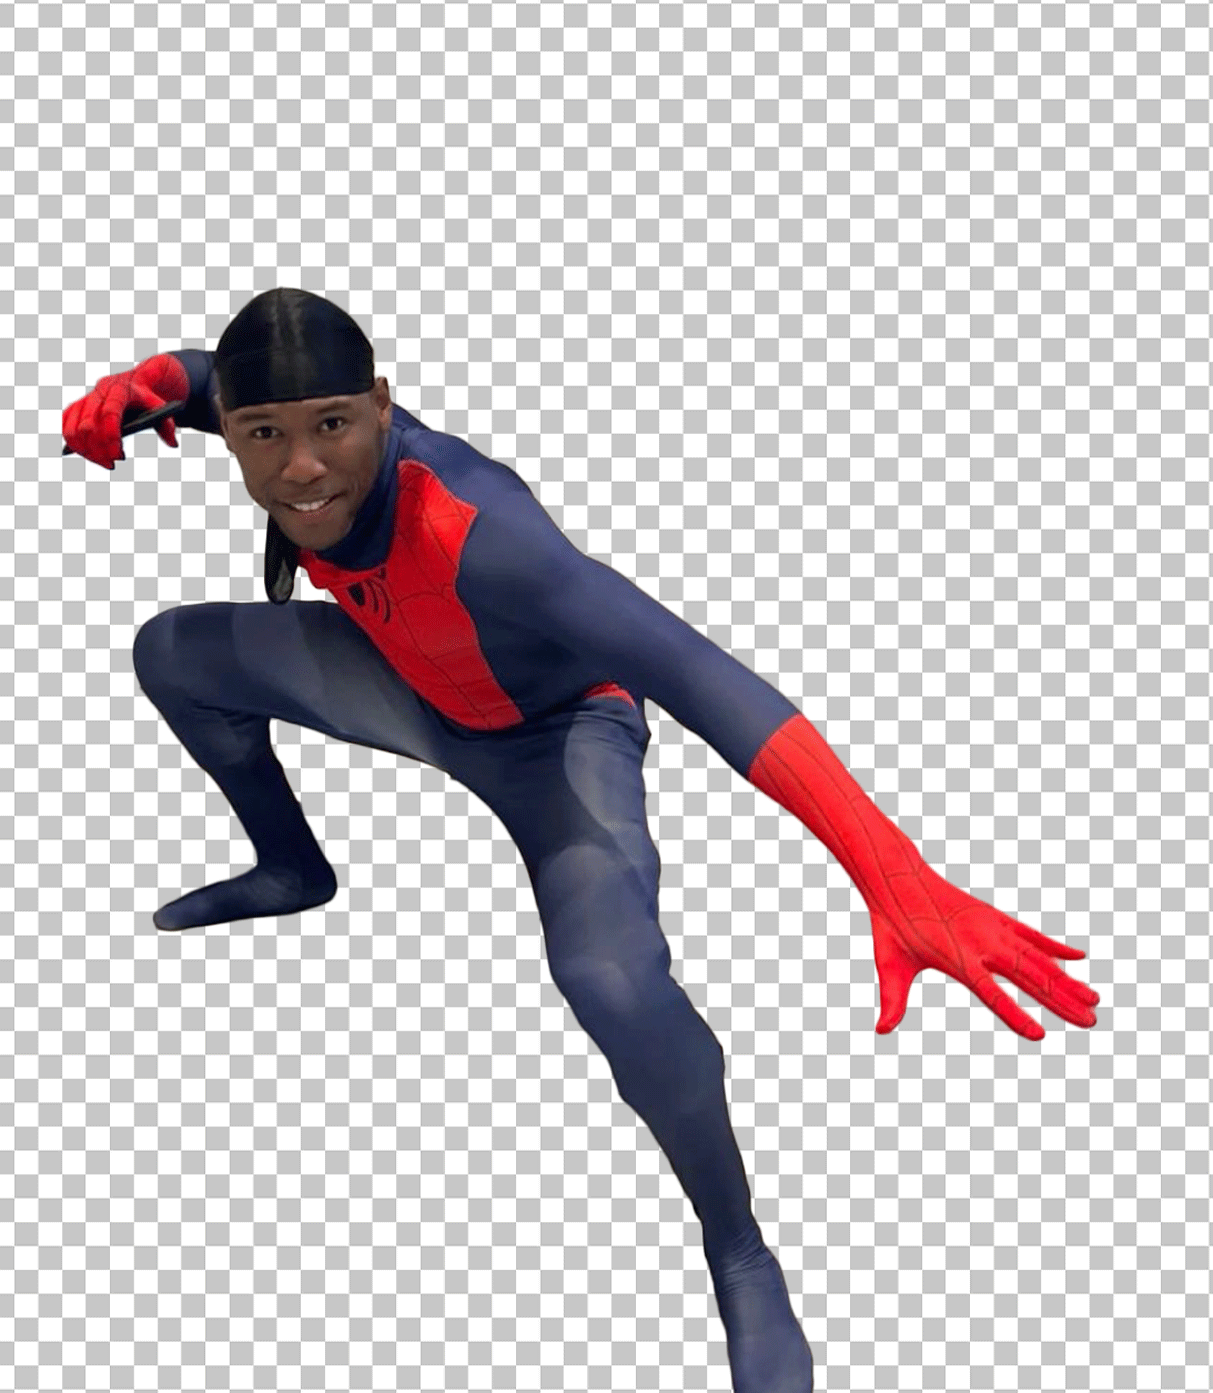 King Kenny Spider Man stance PNG Image